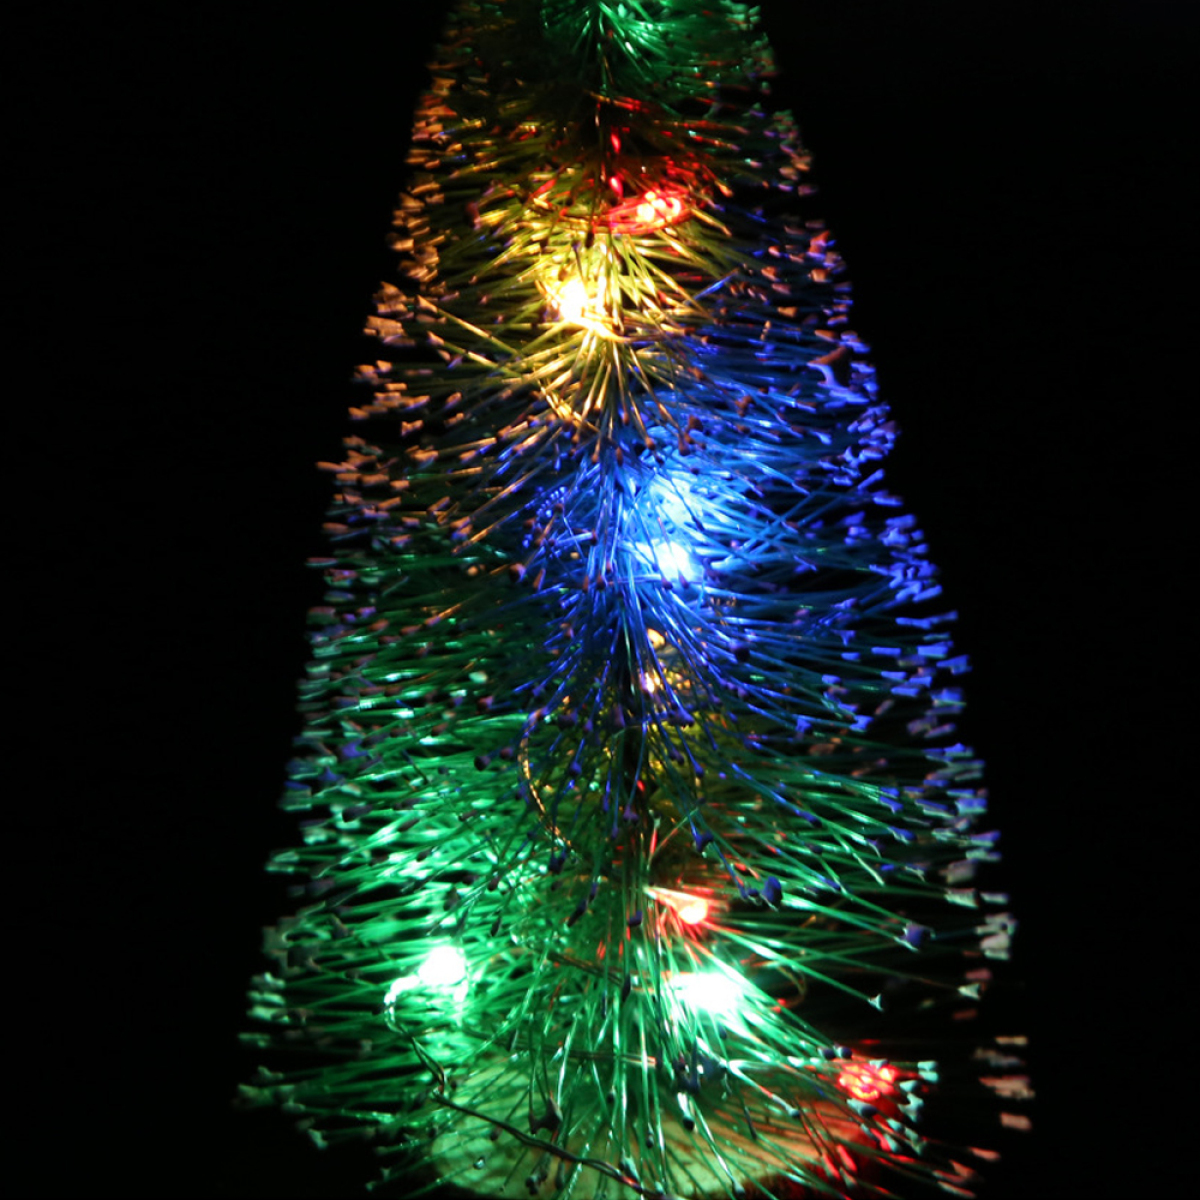 COZEVDNT Small Pine Christmas Trees - Weihnachtsdeko, Decor Grün. Holiday Party Farbe